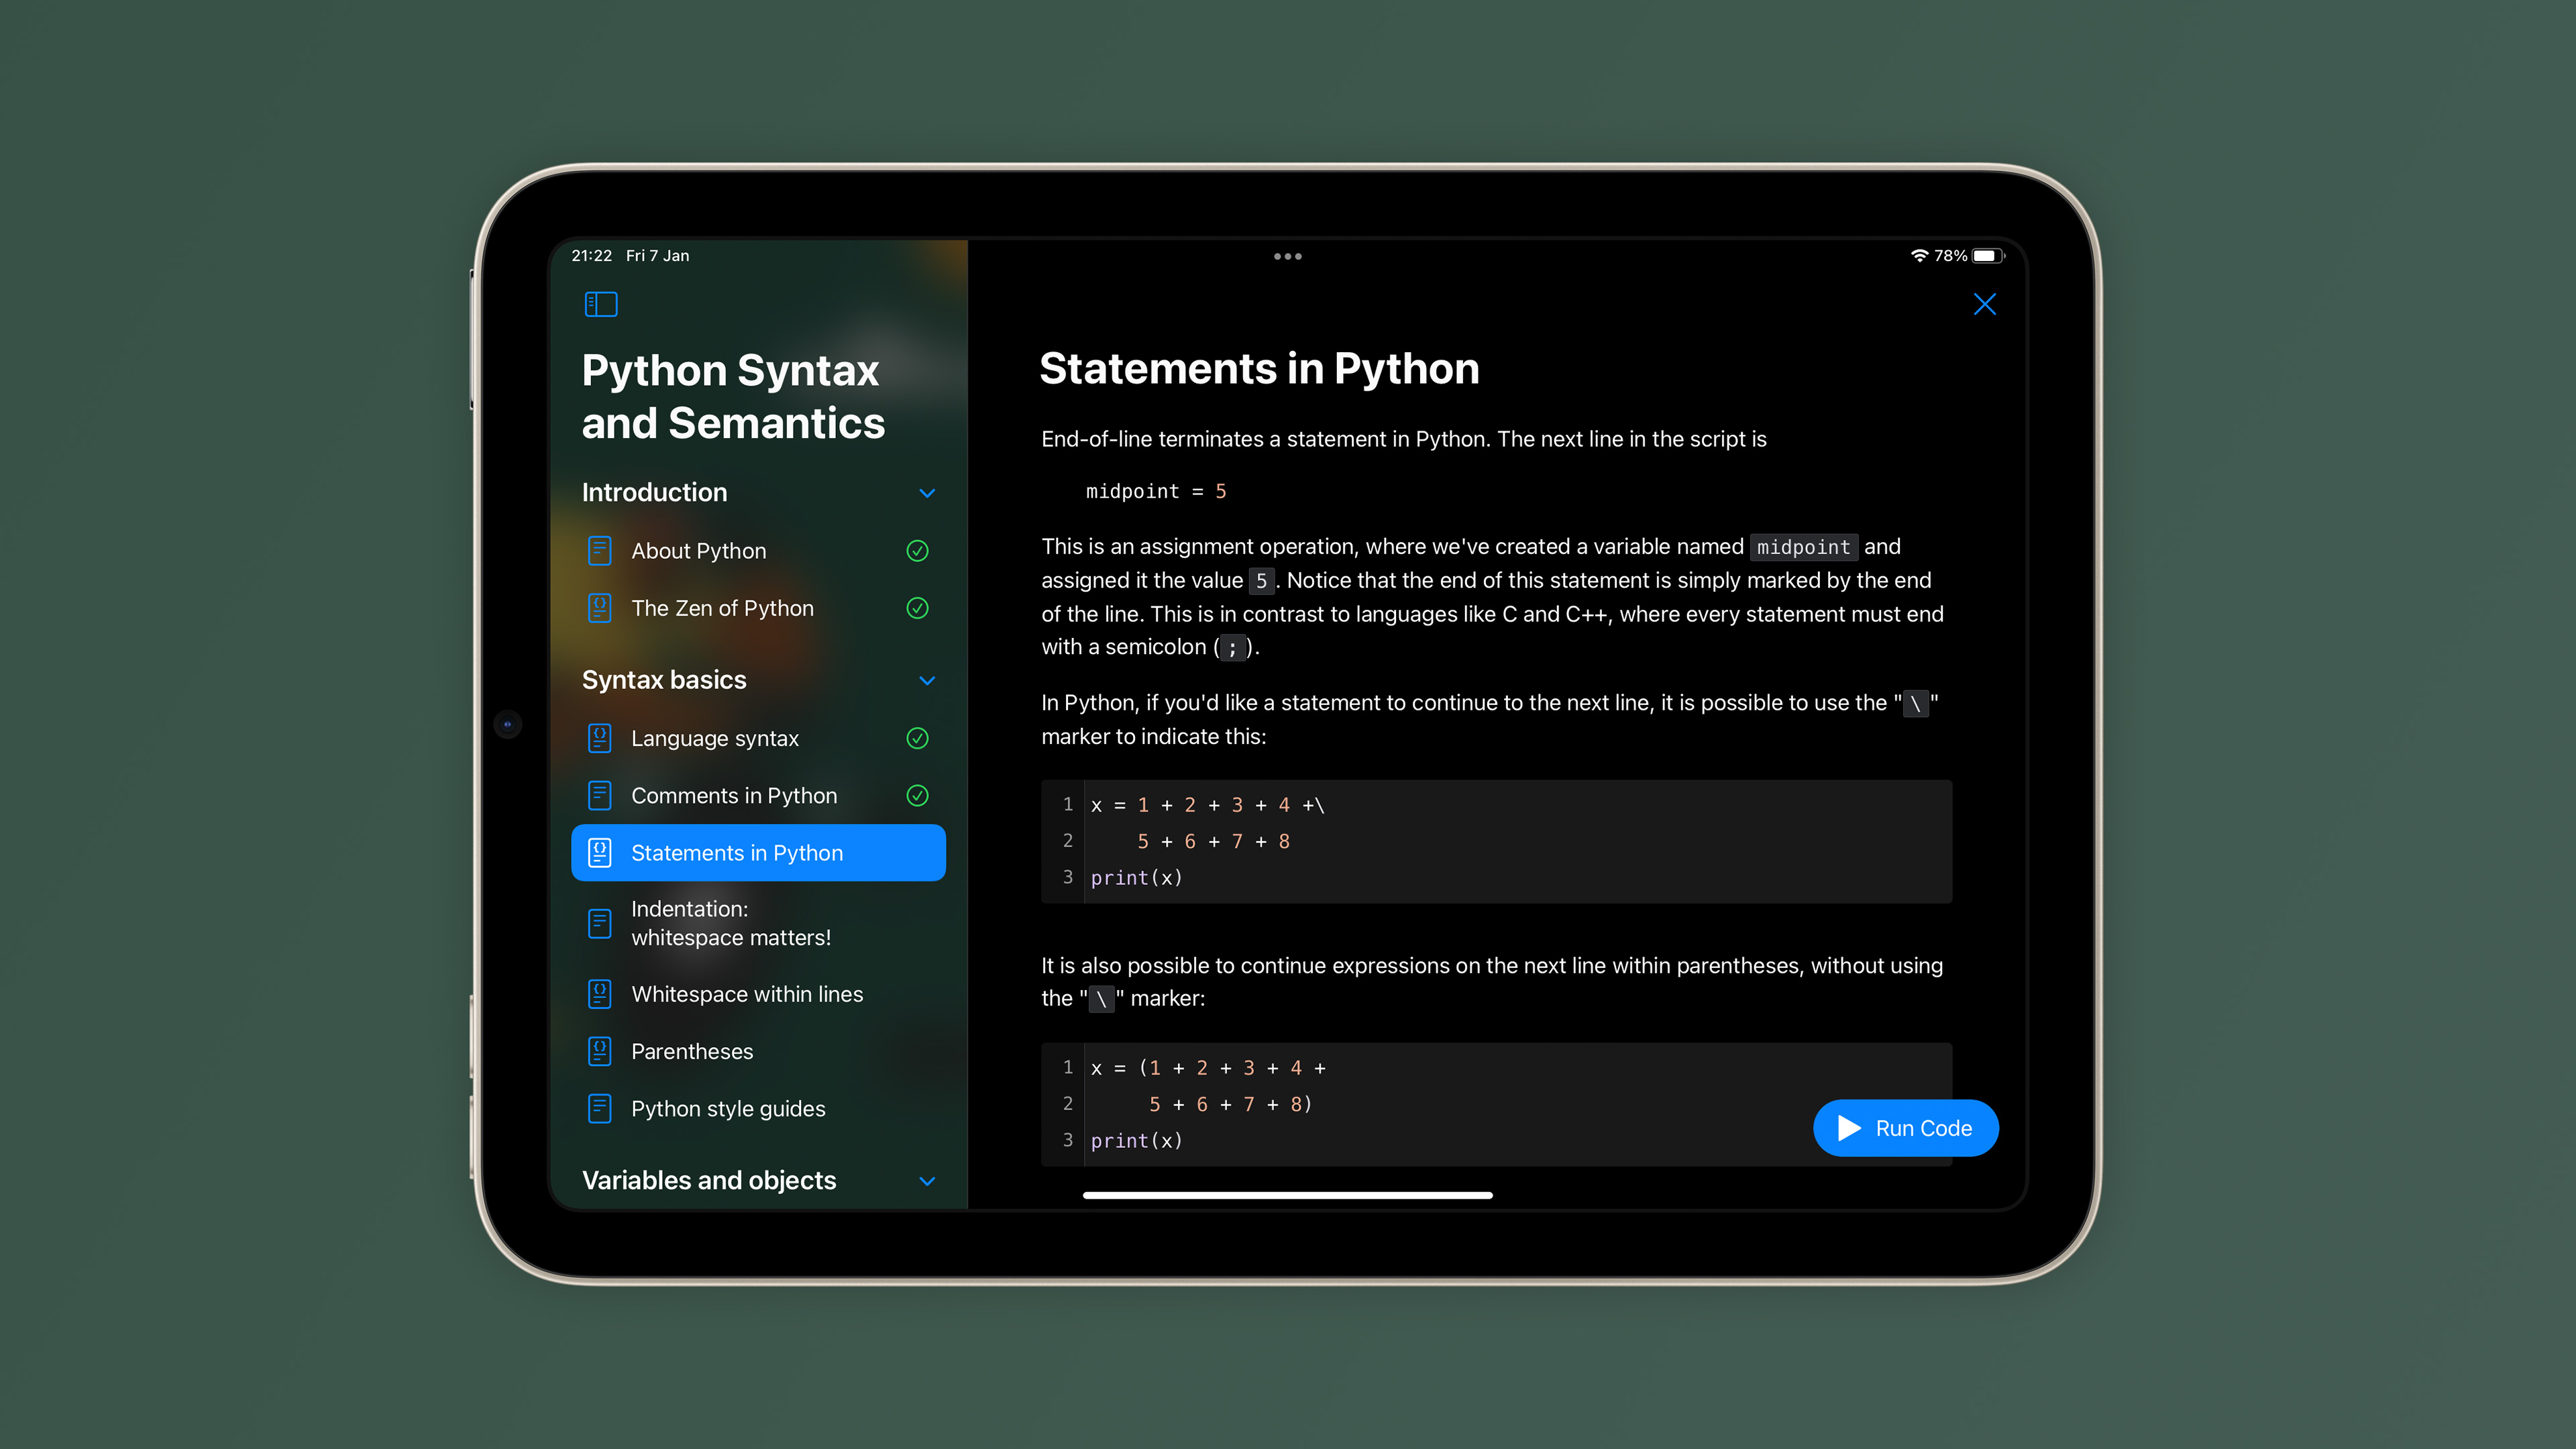 Can I code Python on iPad?